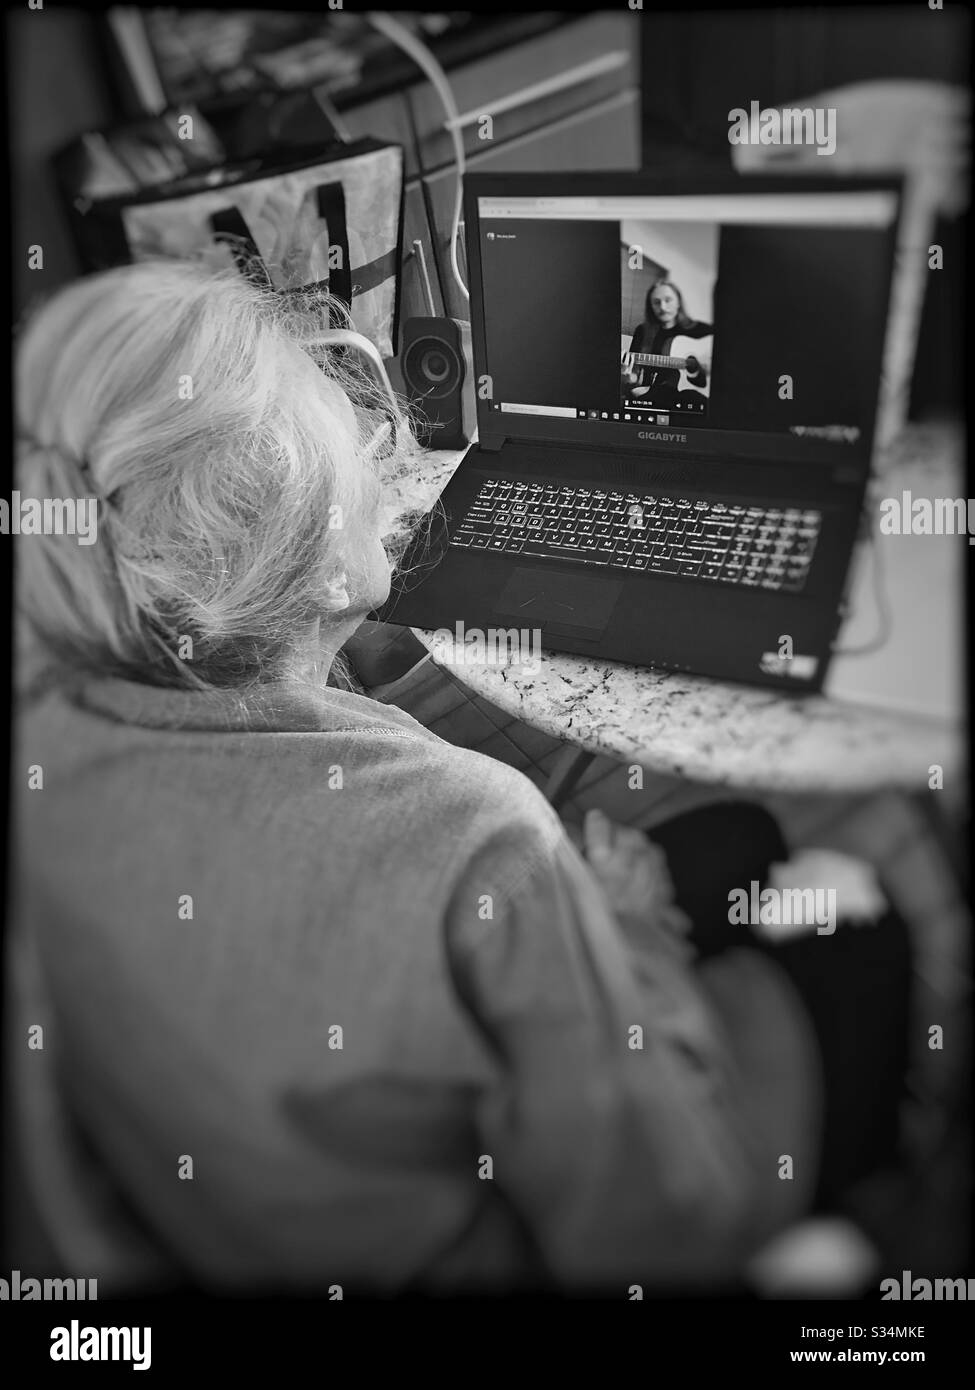 Grandmother watching video of grandson on Instagram while socially isolating during coronavirus quarantine. Stock Photo